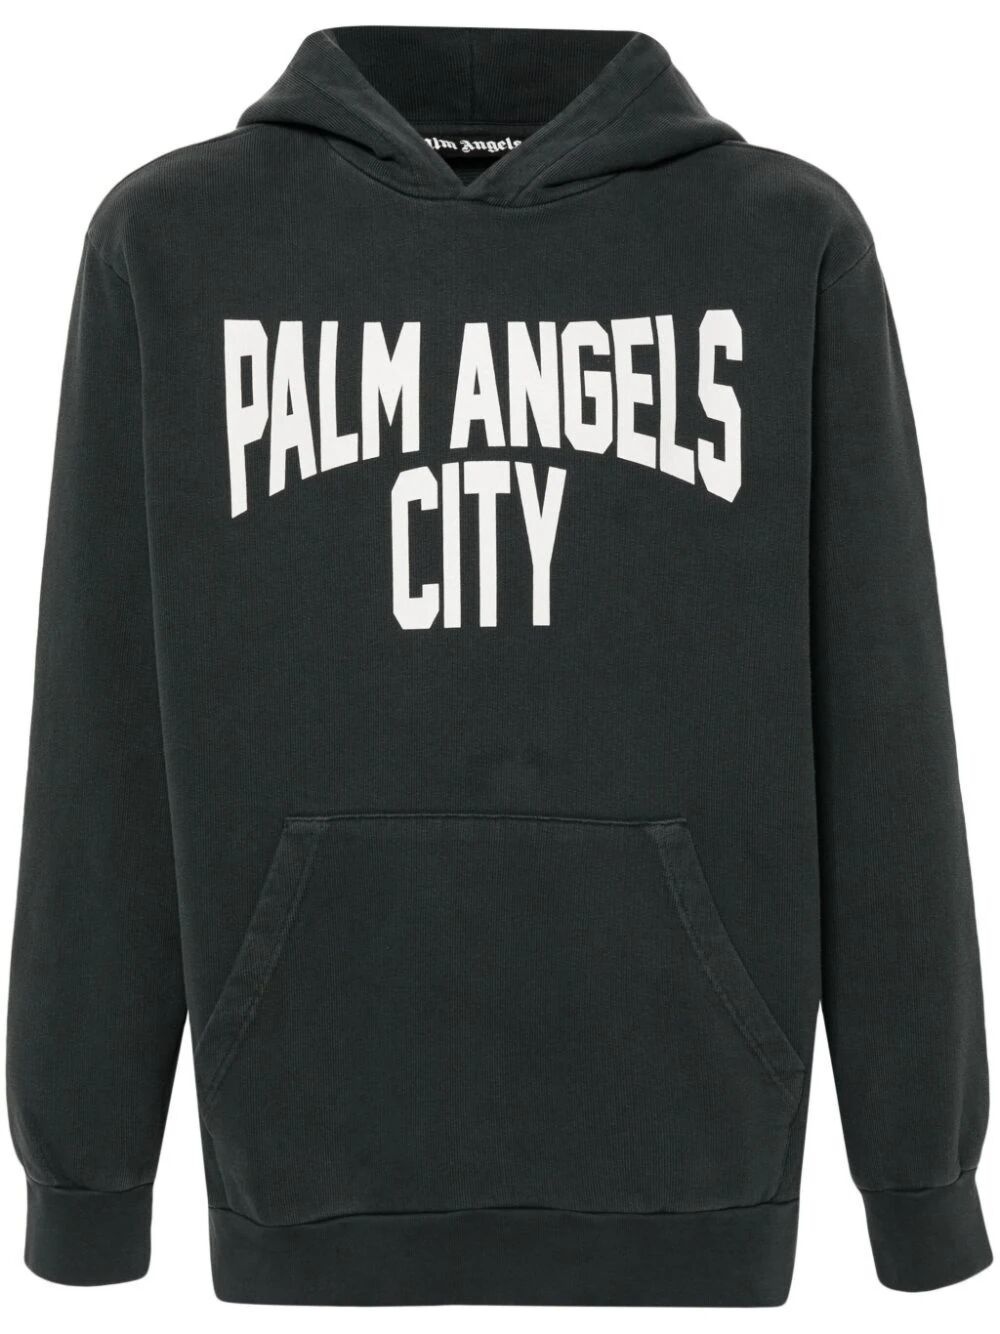 Palm angels city hoodie - 1